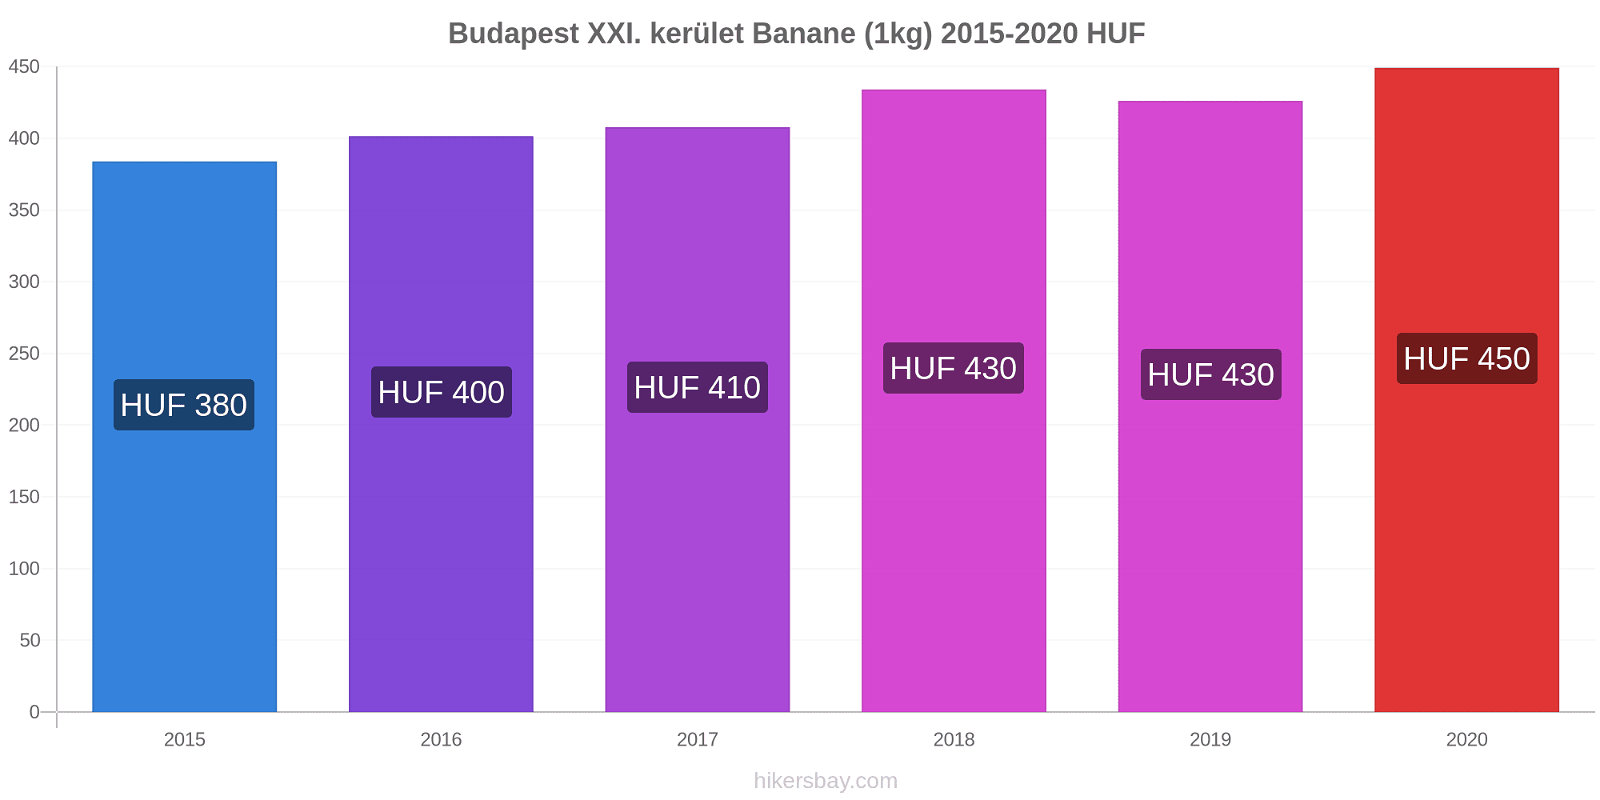 Budapest XXI. kerület variazioni di prezzo Banana (1kg) hikersbay.com